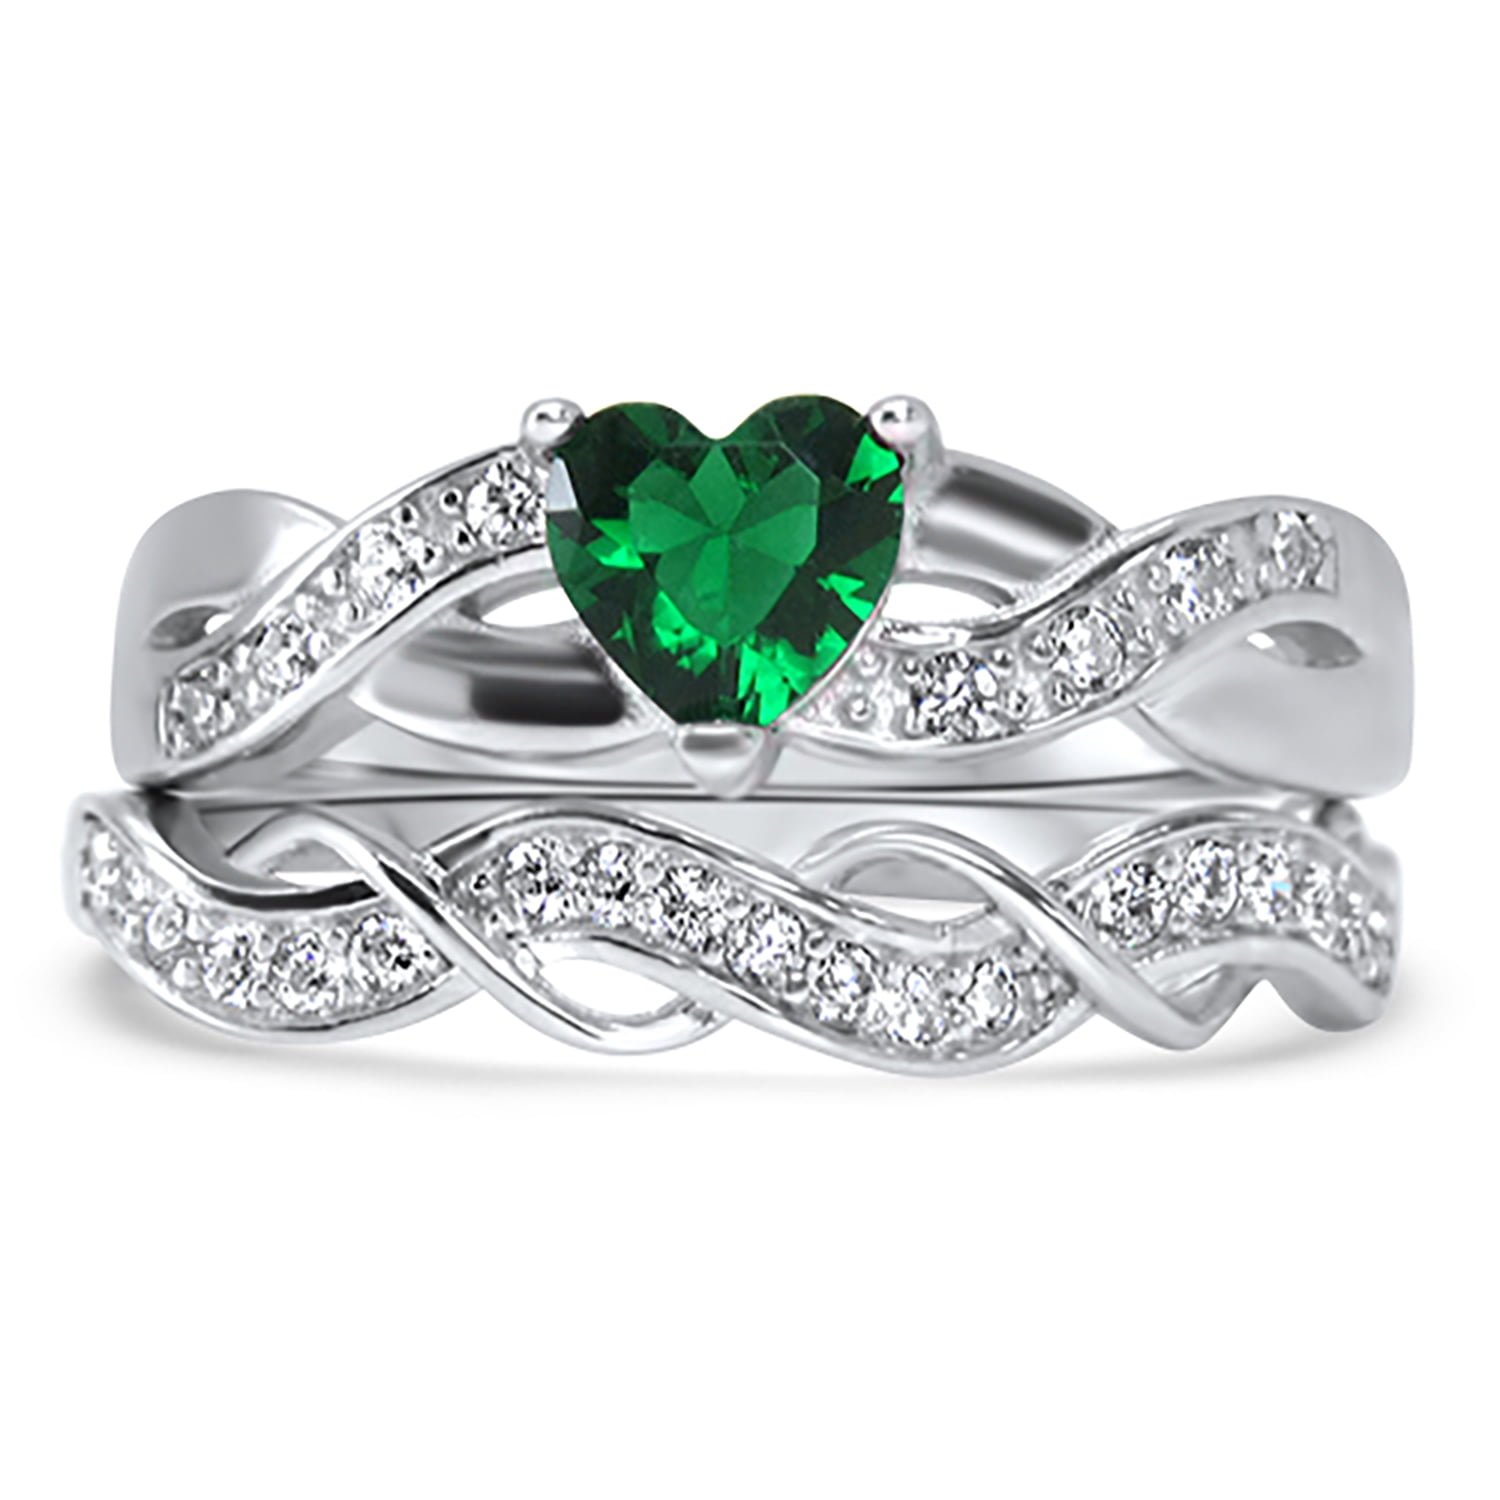 Sterling Silver Ladies Green & White CZ Claddagh Wedding Ring Set 